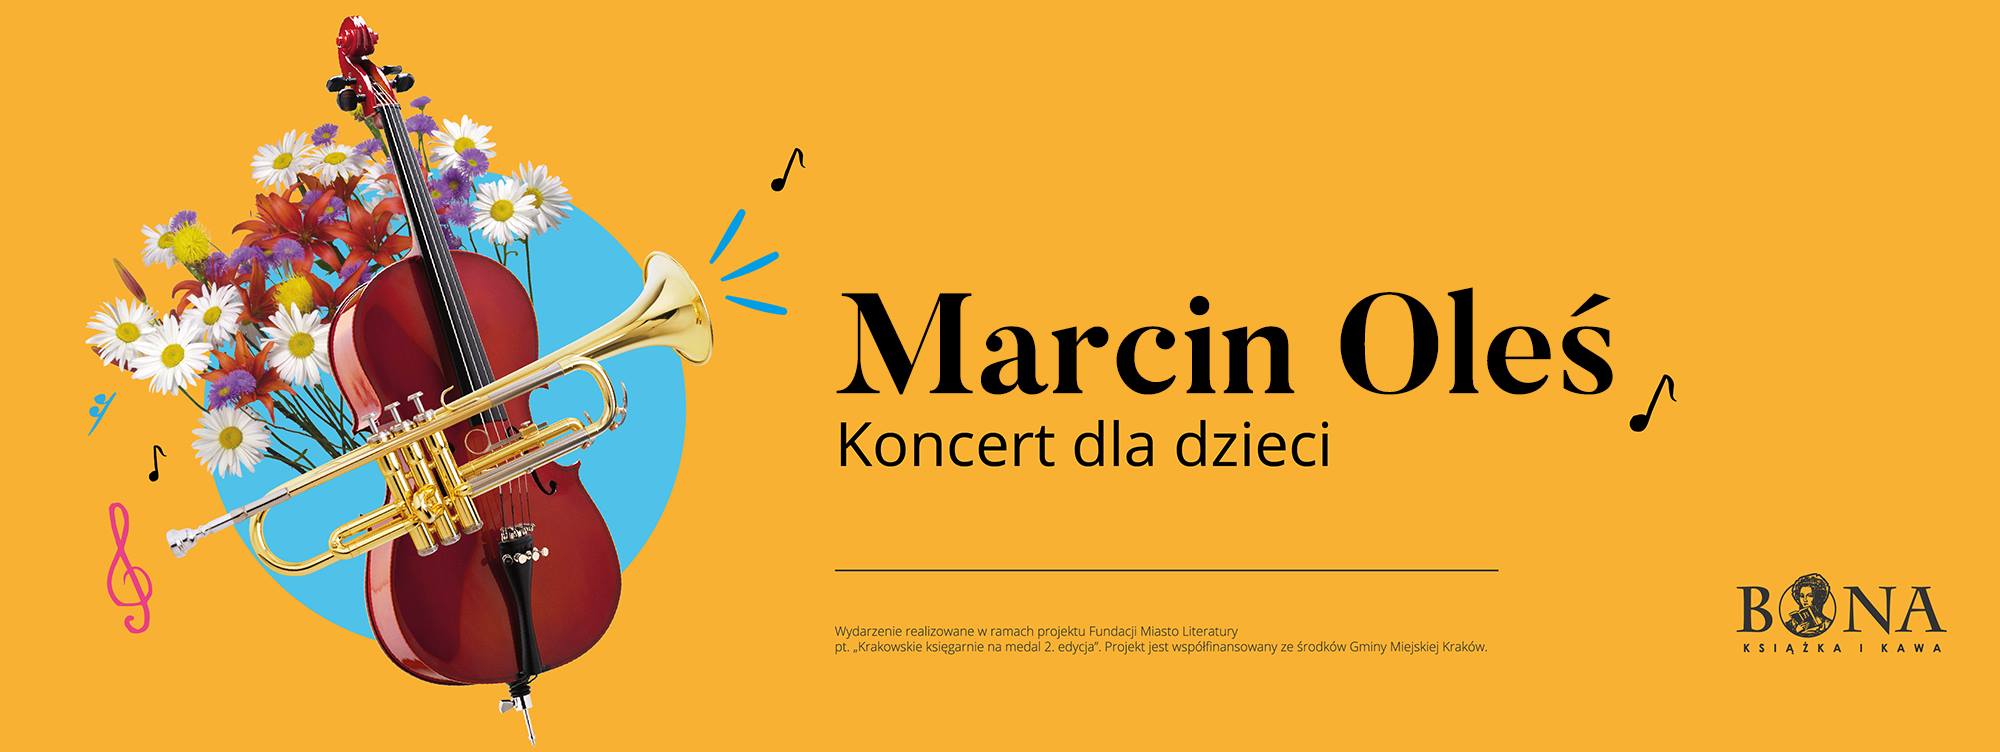 Marcin Oleś - koncert dla dzieci w Księgarni Bona